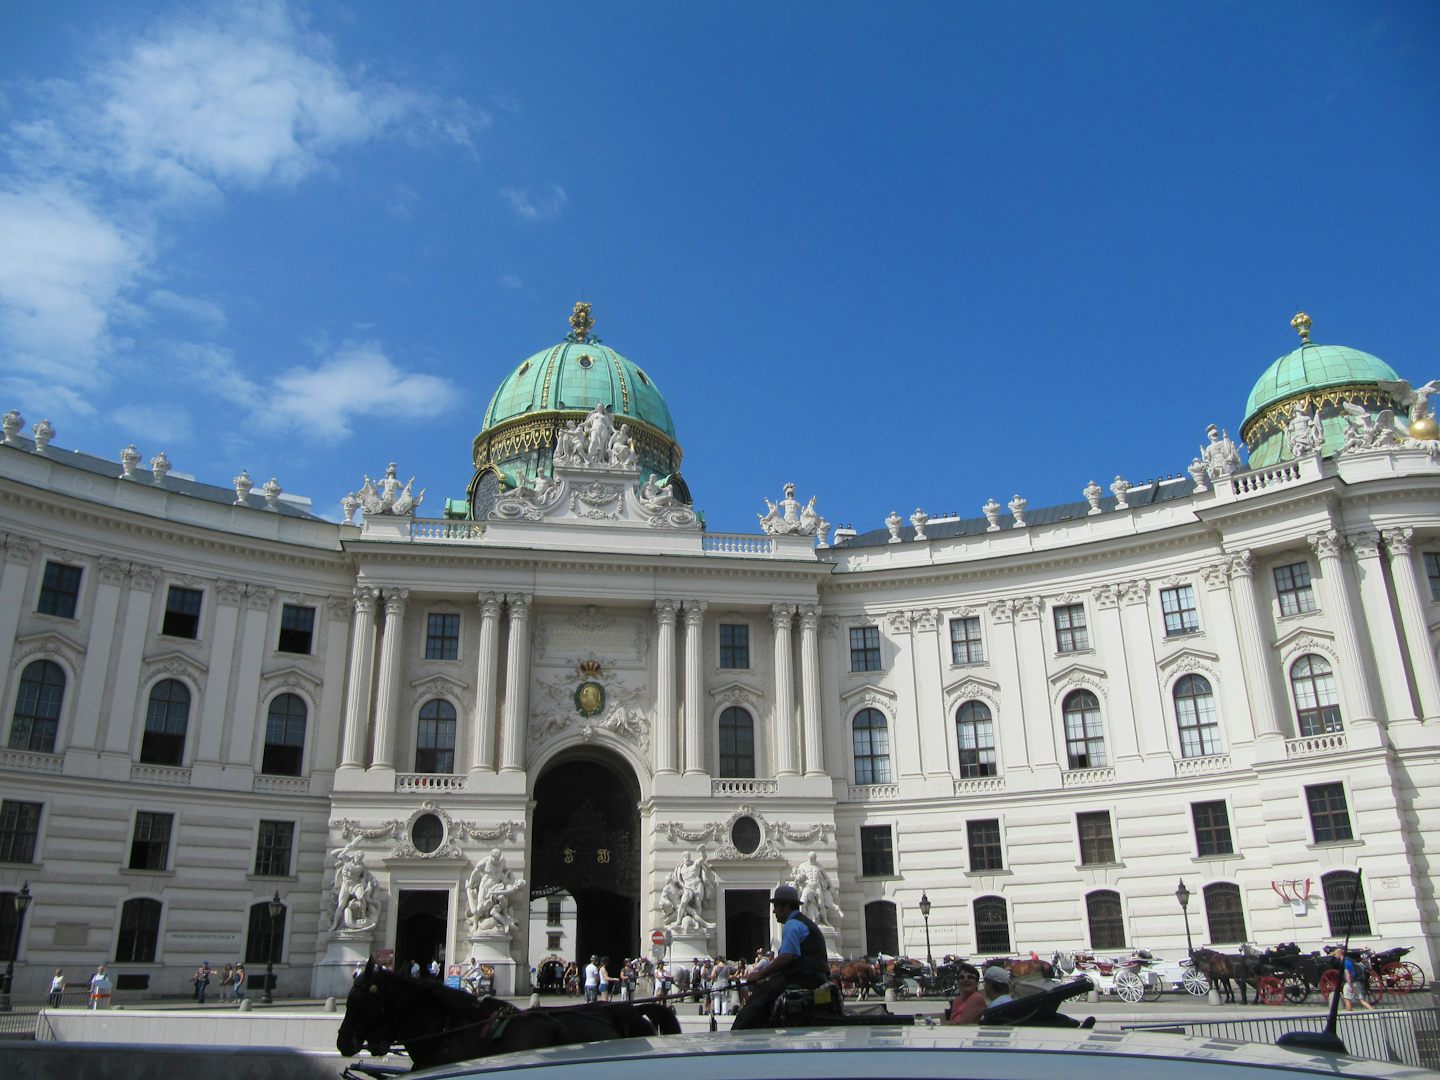 Fantastic buildings in Vienna